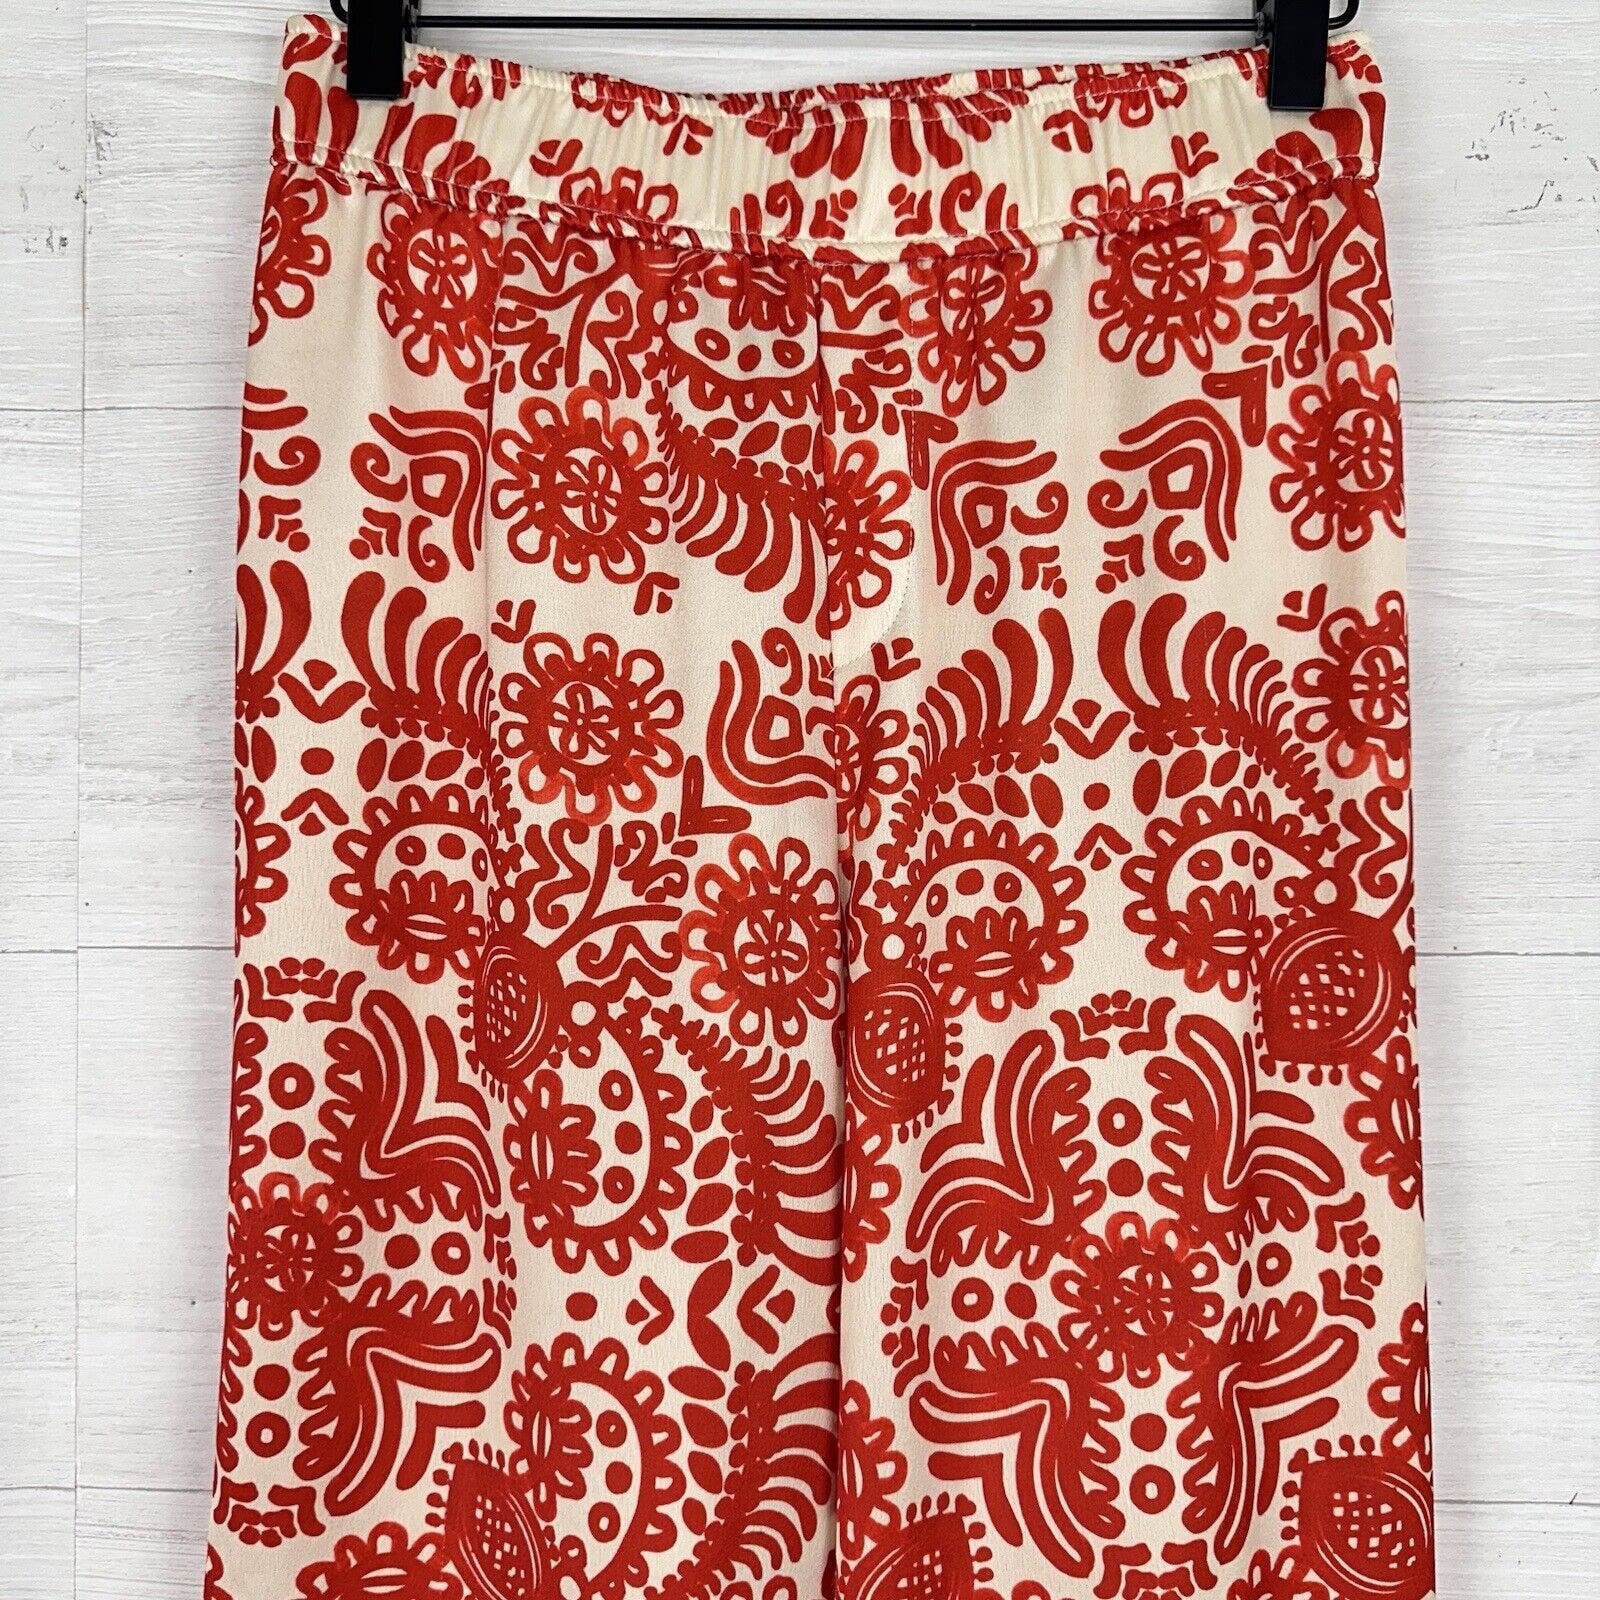 Factory Direct  Zara Satin Printed Pajama Style Wide Leg Pants Size S Floral Orange Side Slits l5P4Cu8C6 Low Price